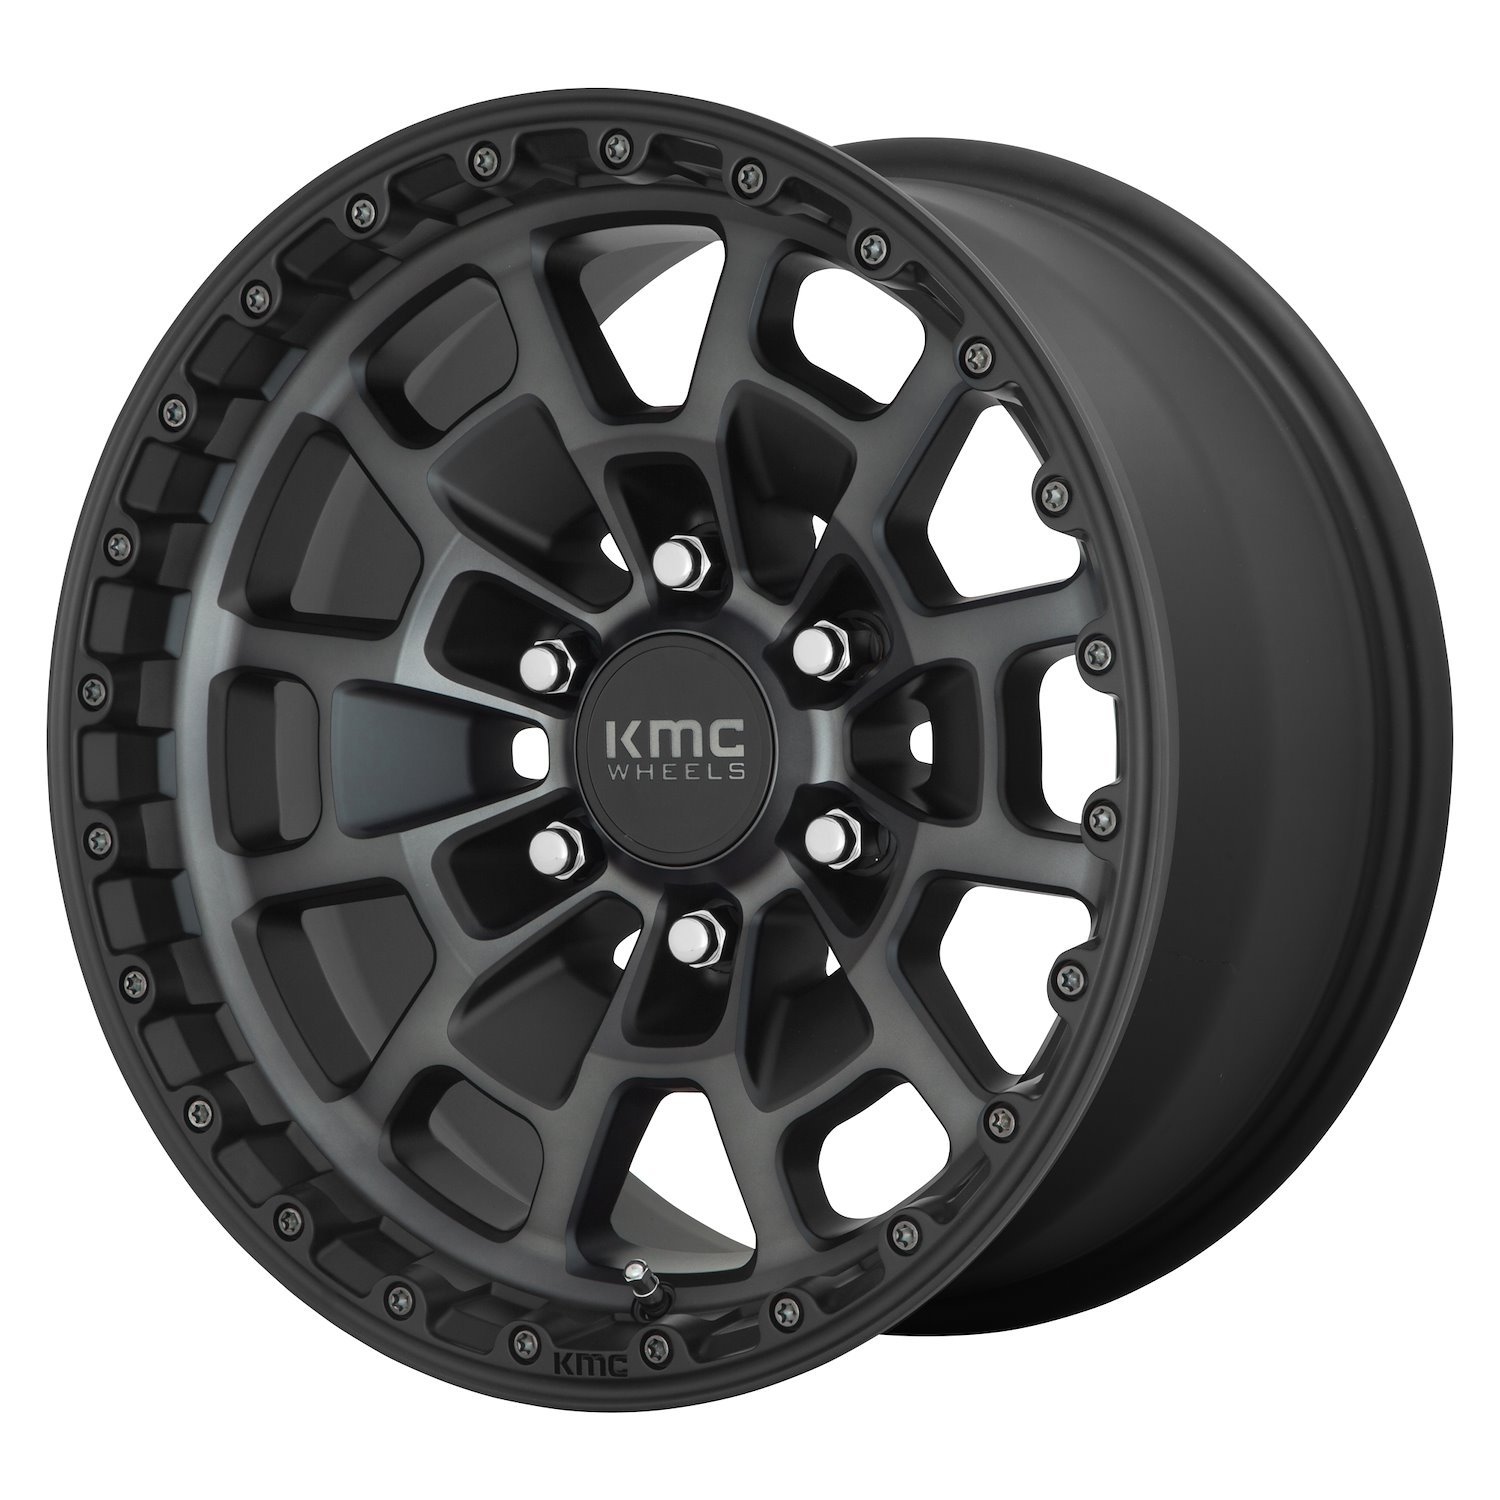 KMC KM718 Summit Wheel [Size: 17" x 8.5"] Satin Black with Gray Accents